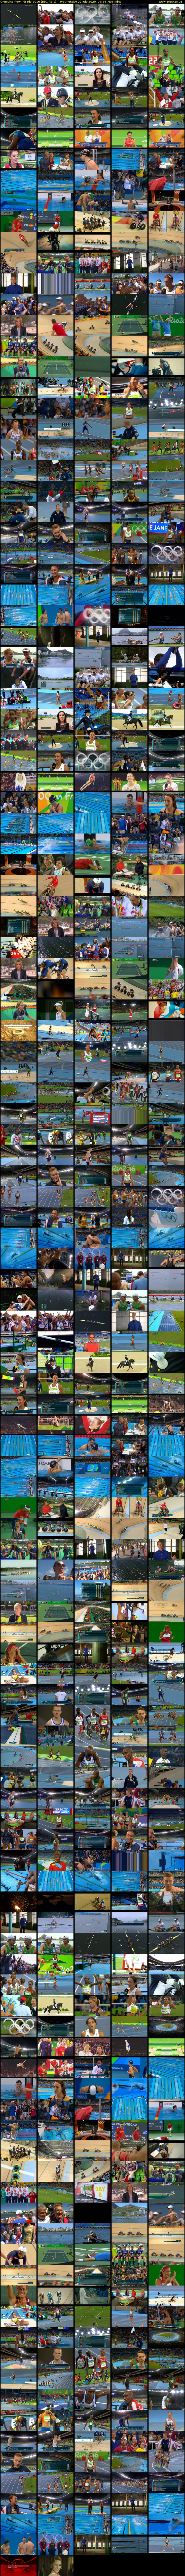 Olympics Rewind: Rio 2016 (BBC RB 1) Wednesday 22 July 2020 08:34 - 15:50